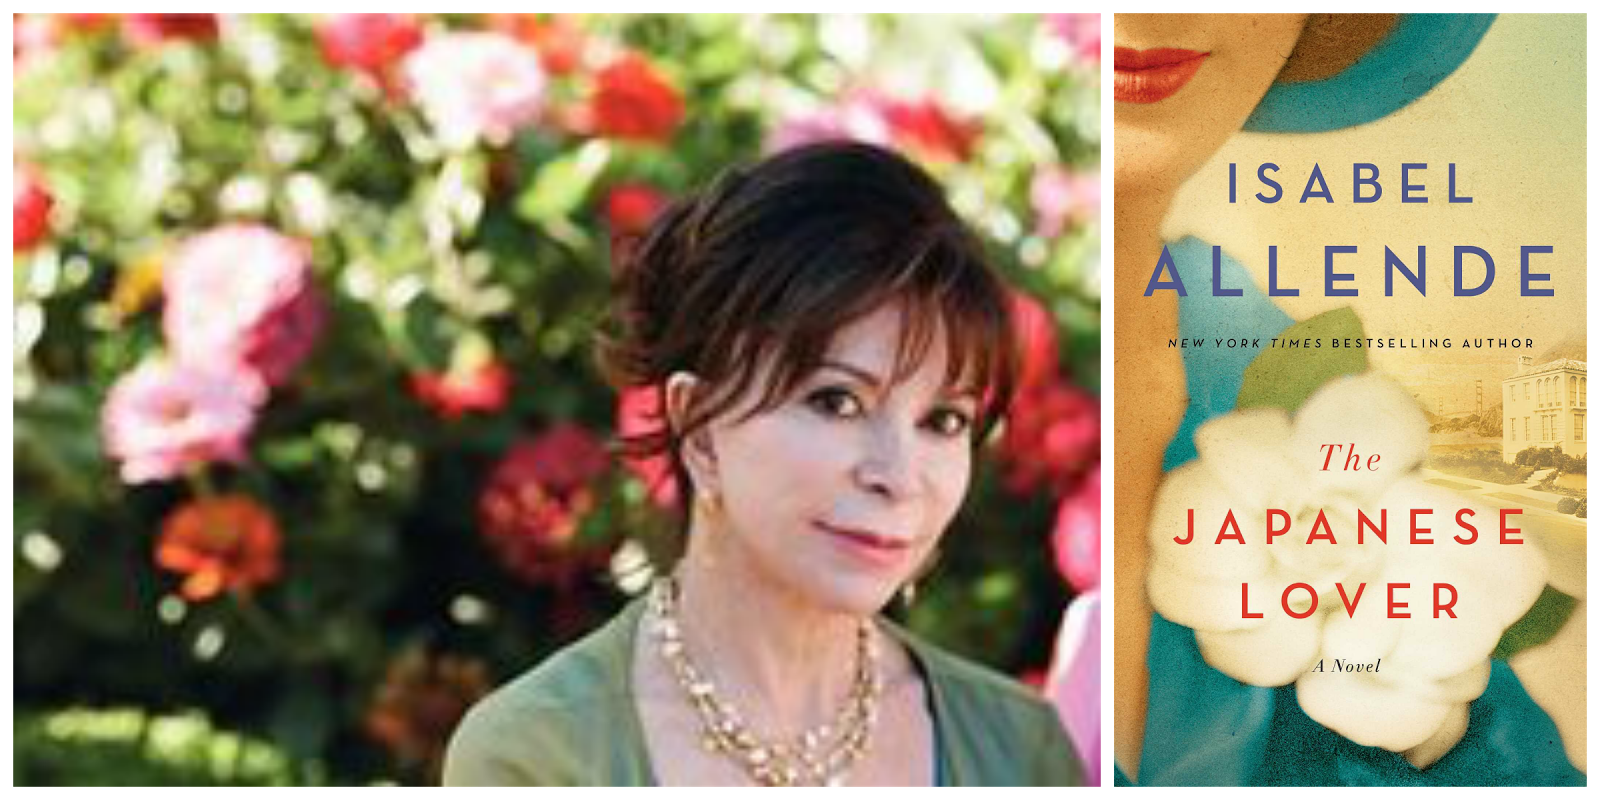 #FridayReads: The Japanese Lover by Isabel Allende